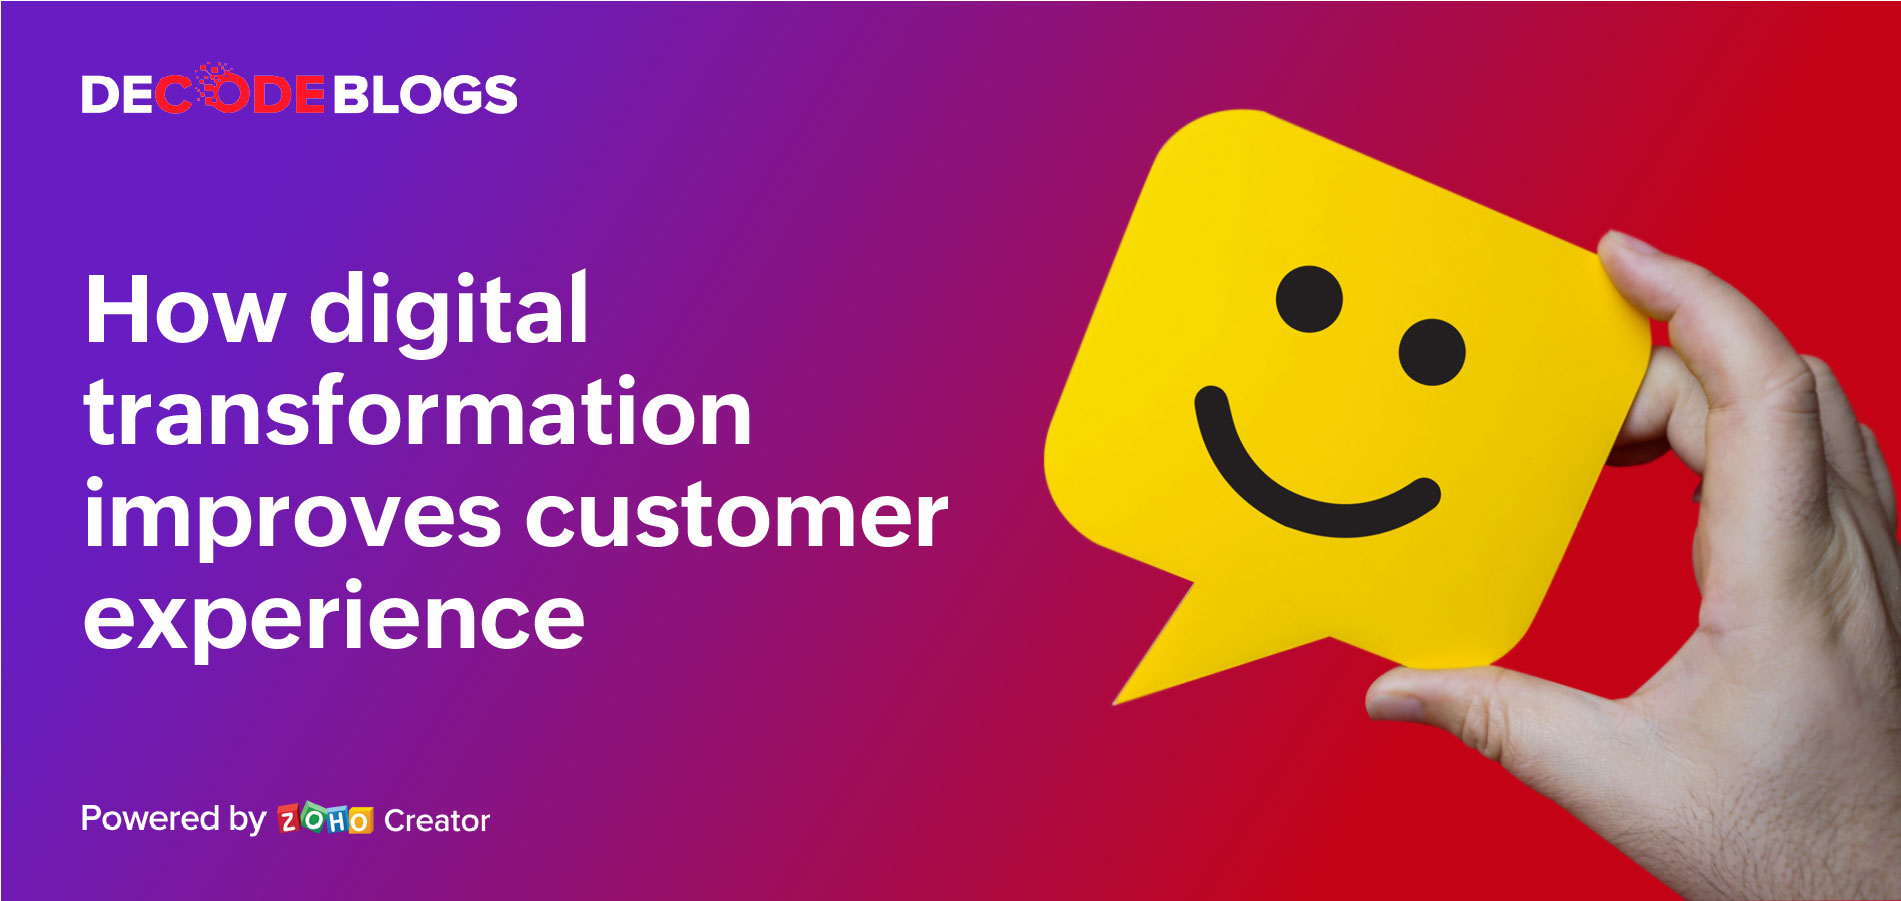  How digital transformation improves customer experience